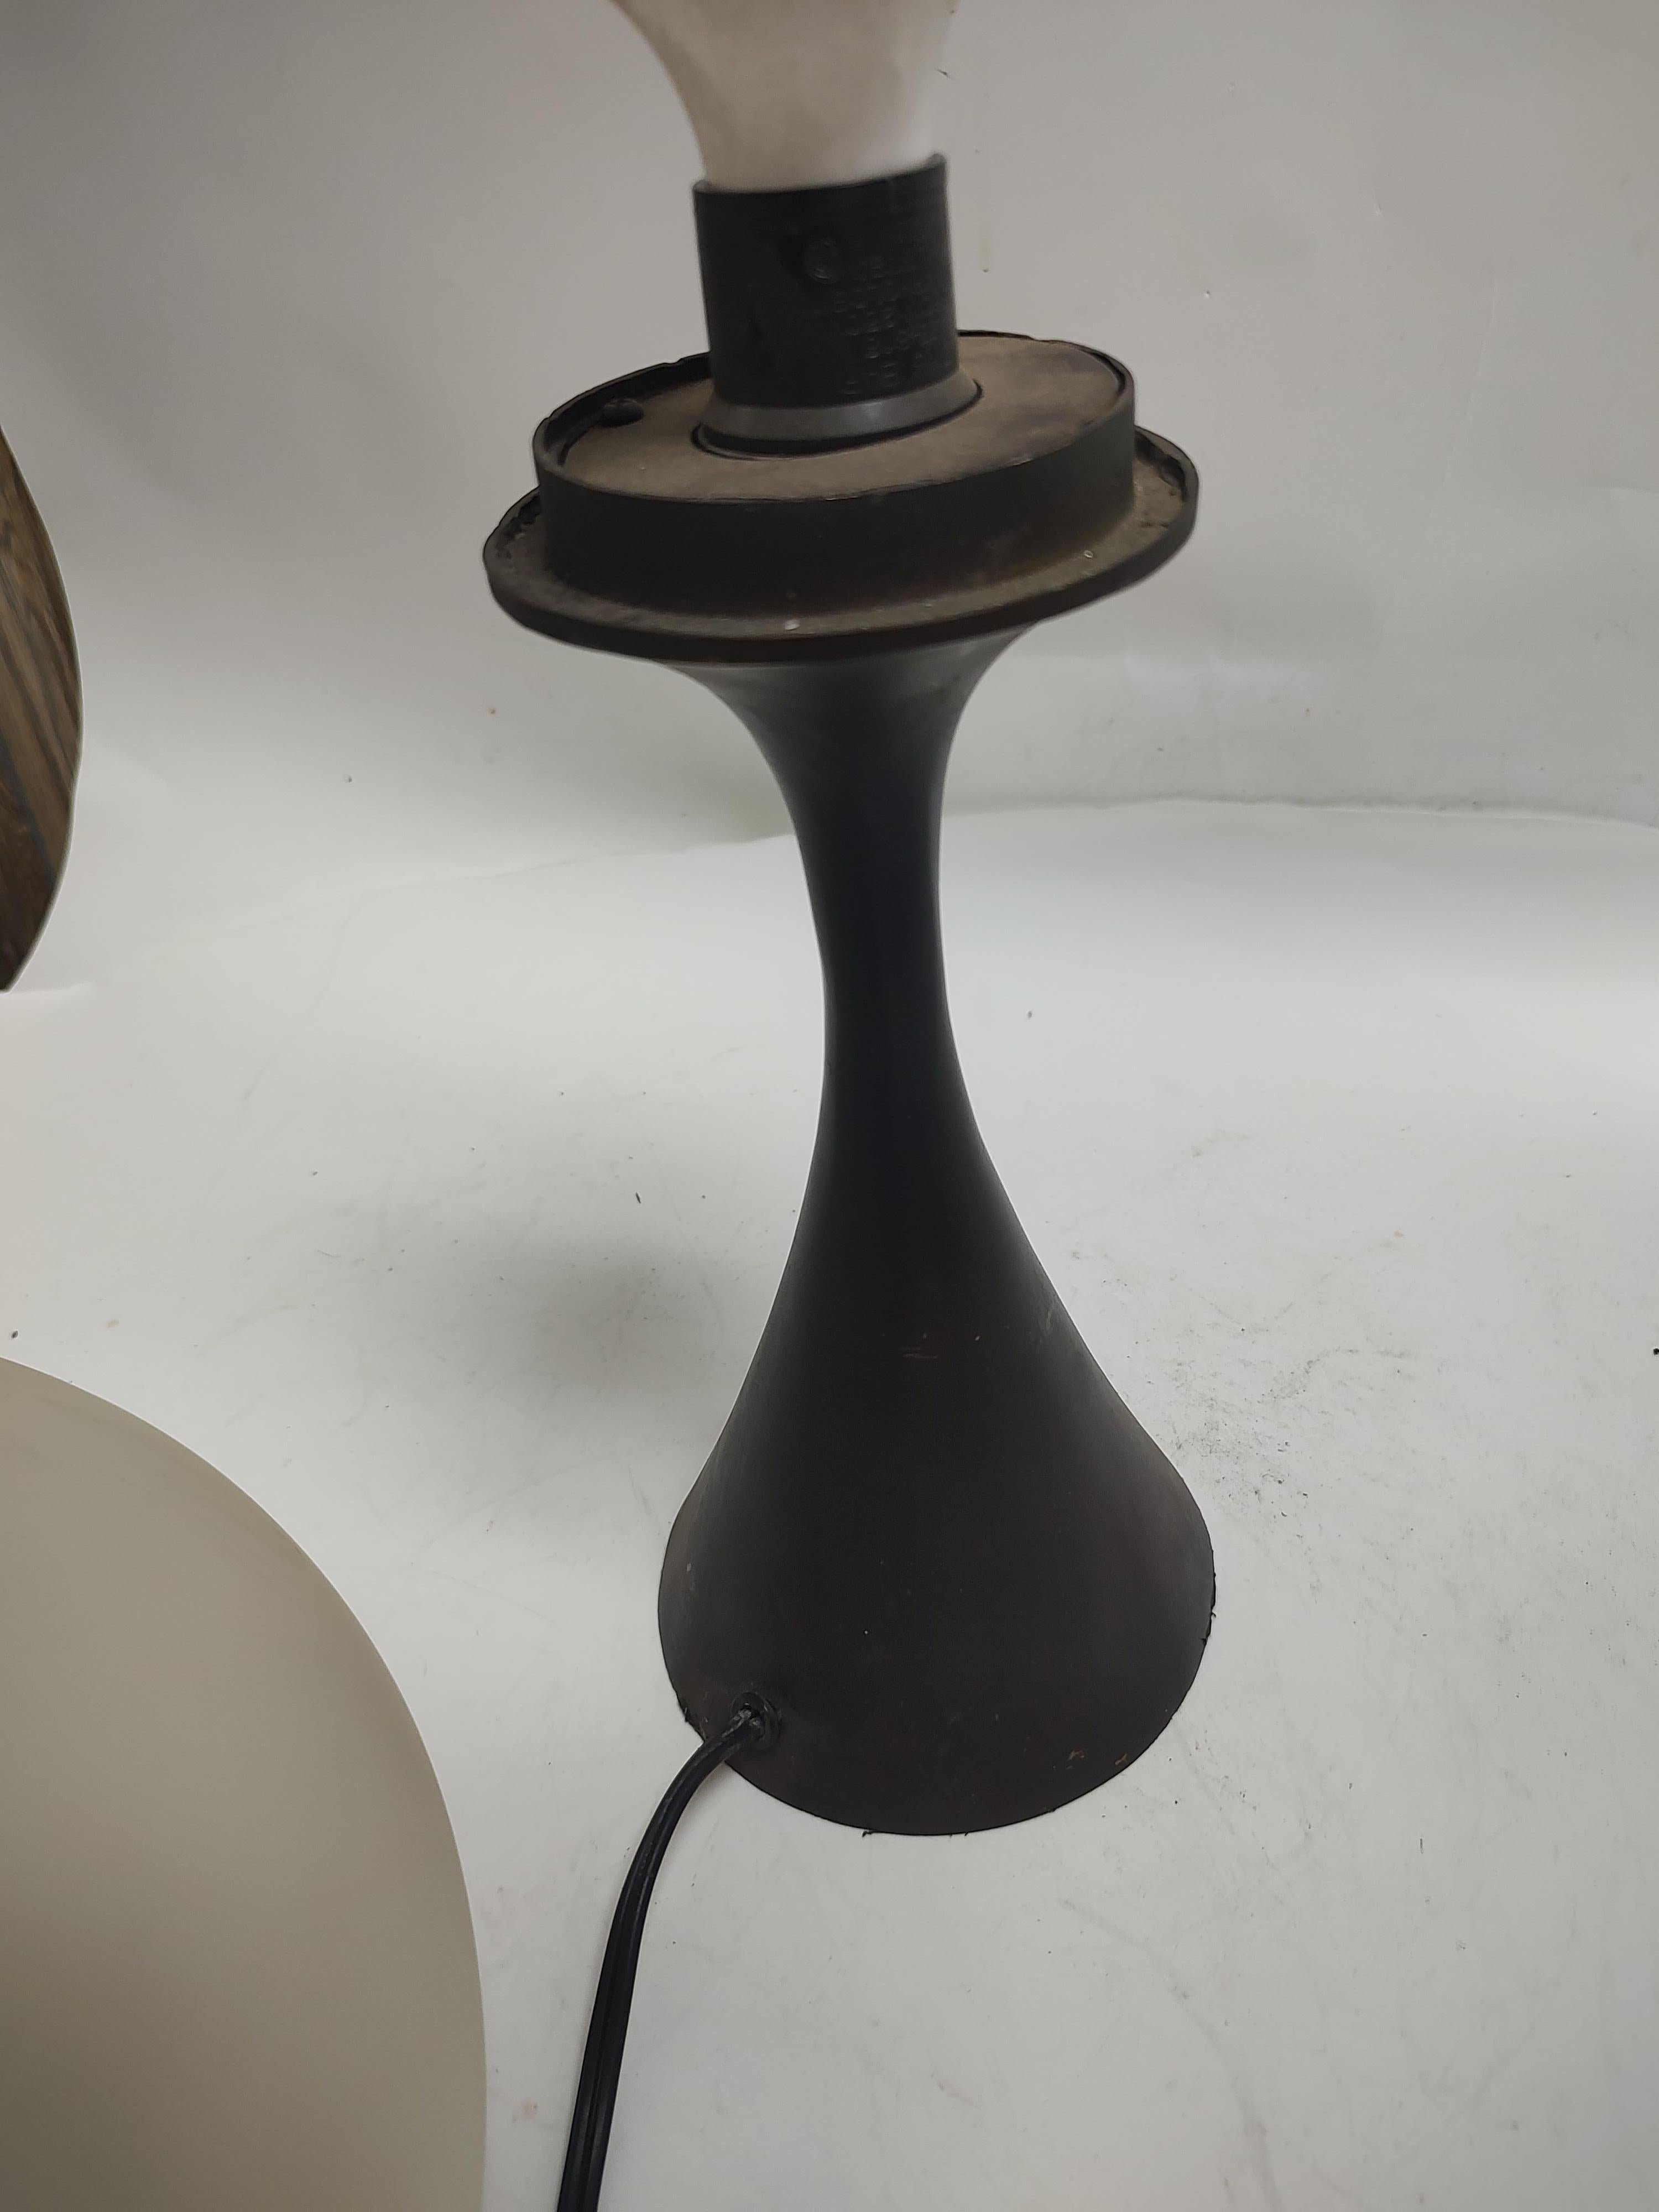 Milk Glass Mid Century Modern Sculptural Mushroom Table Lamp Attributed to Laurel Lamp Co.